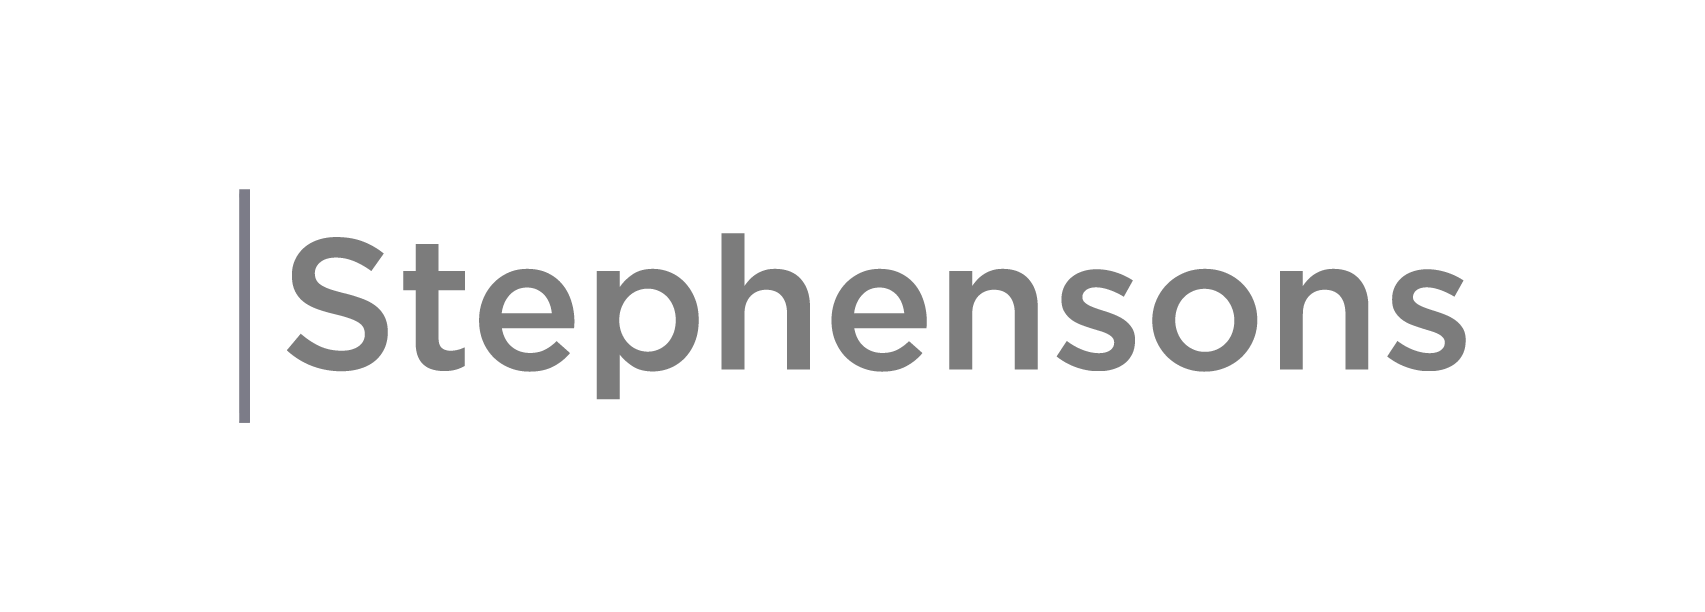 stephensons-logo-8